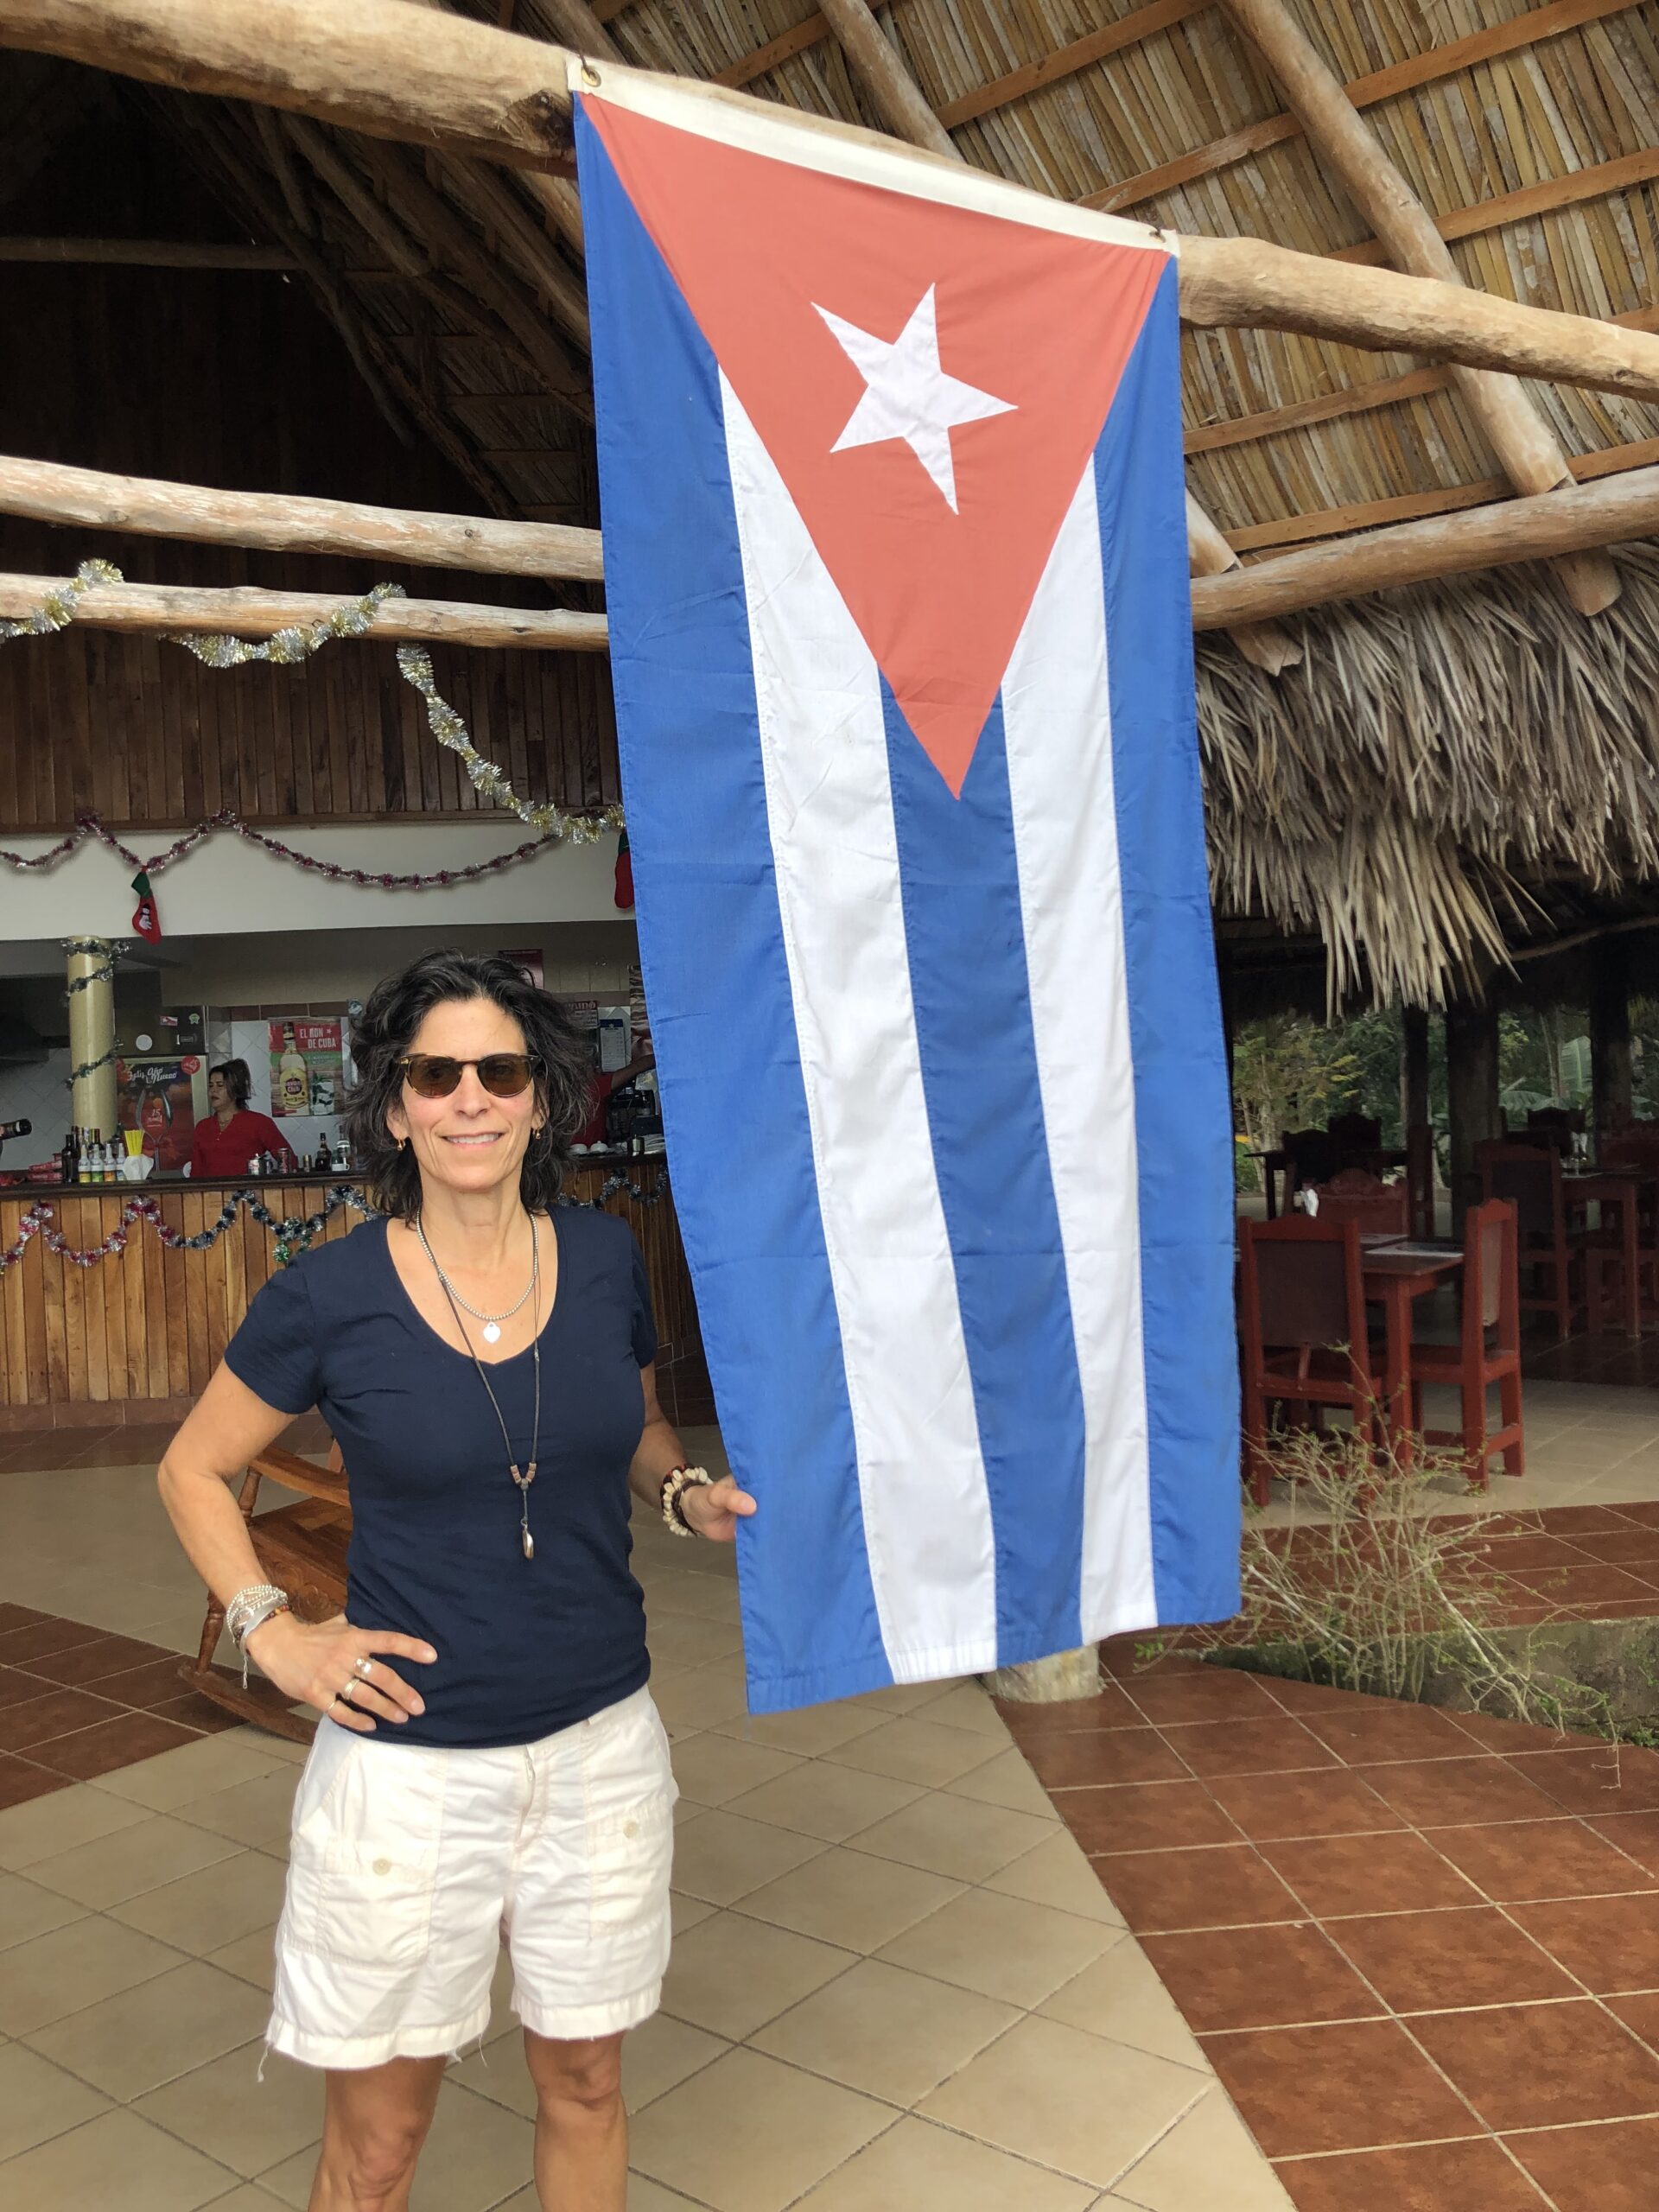 Christiane Arbesu on location in Cuba. COURTESY THE ARTIST